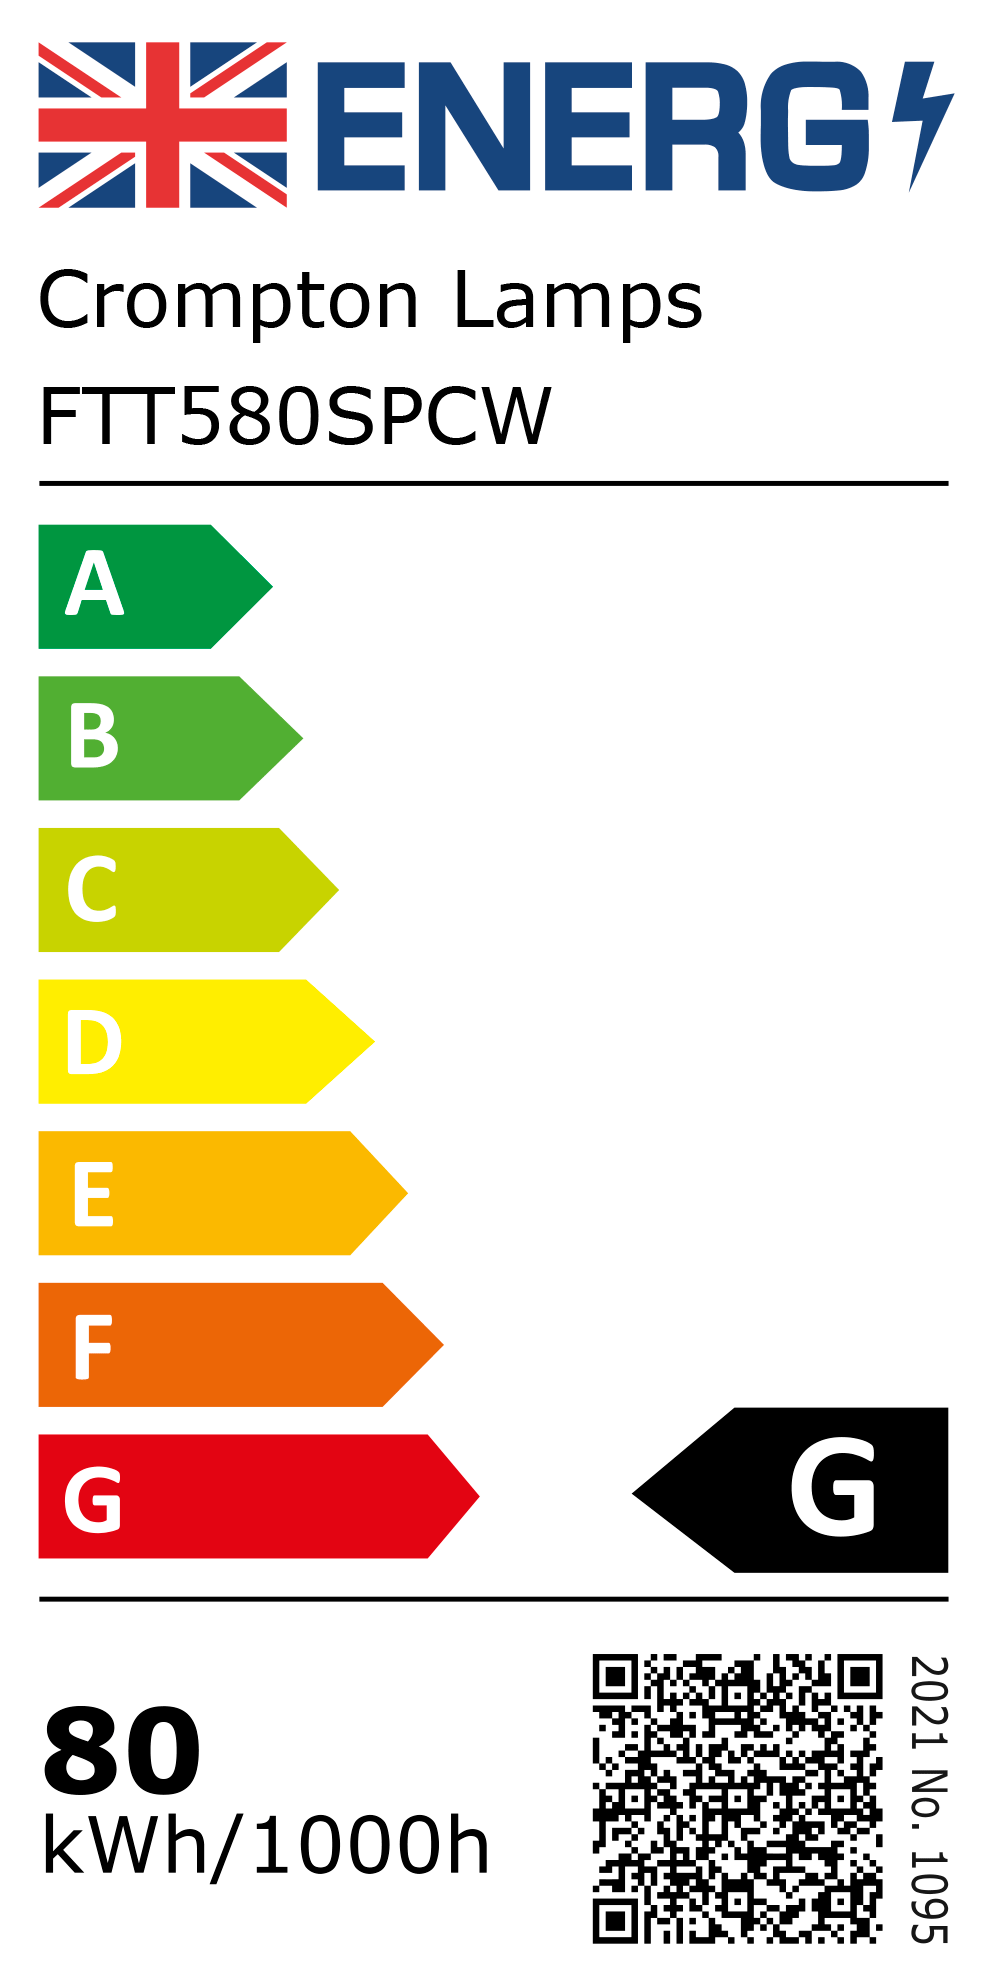 New 2021 Energy Rating Label: Stock Code FTT580SPCW